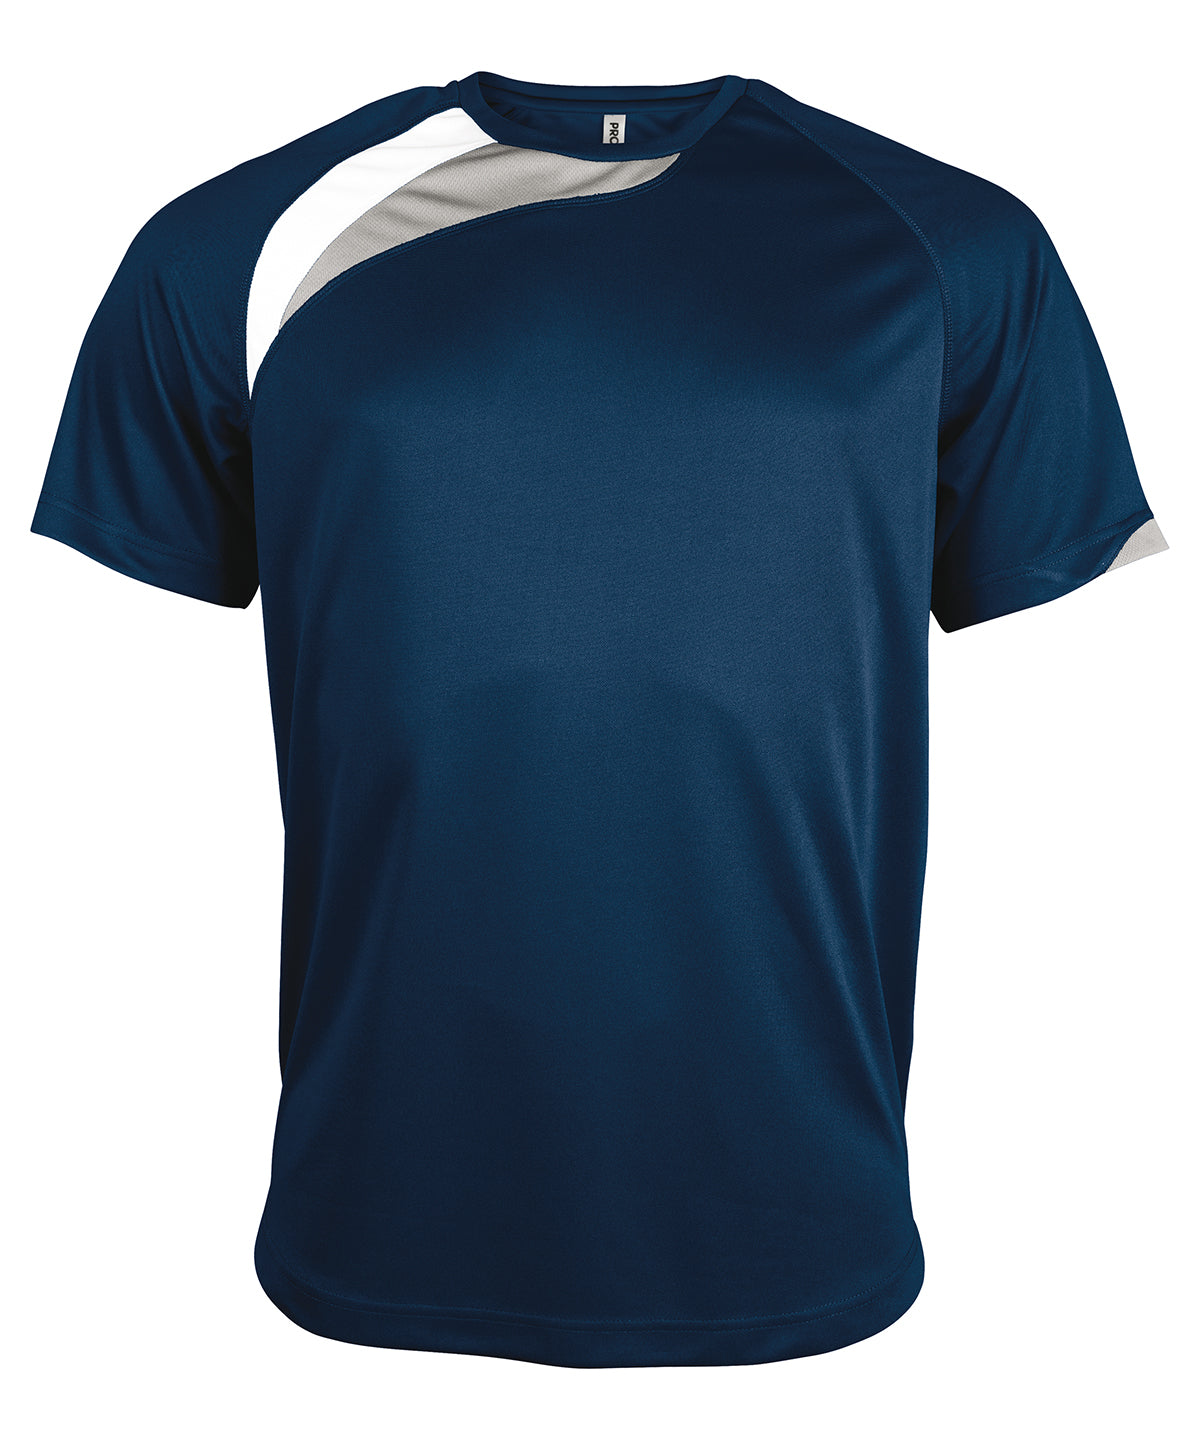 Kariban short-sleeved jersey PA436 - COOZO